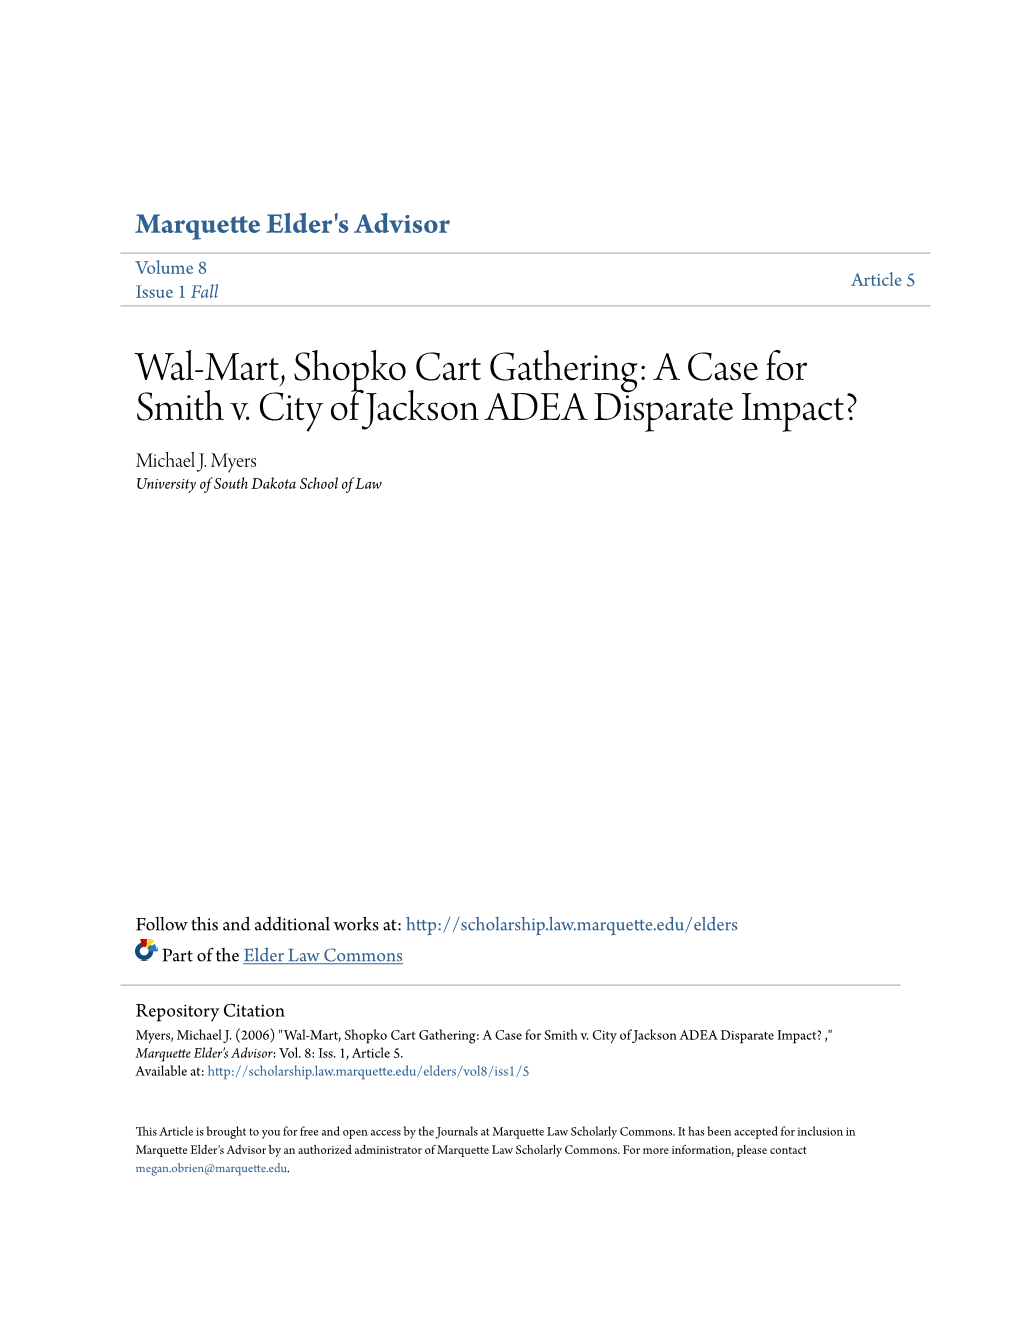 Wal-Mart, Shopko Cart Gathering: a Case for Smith V